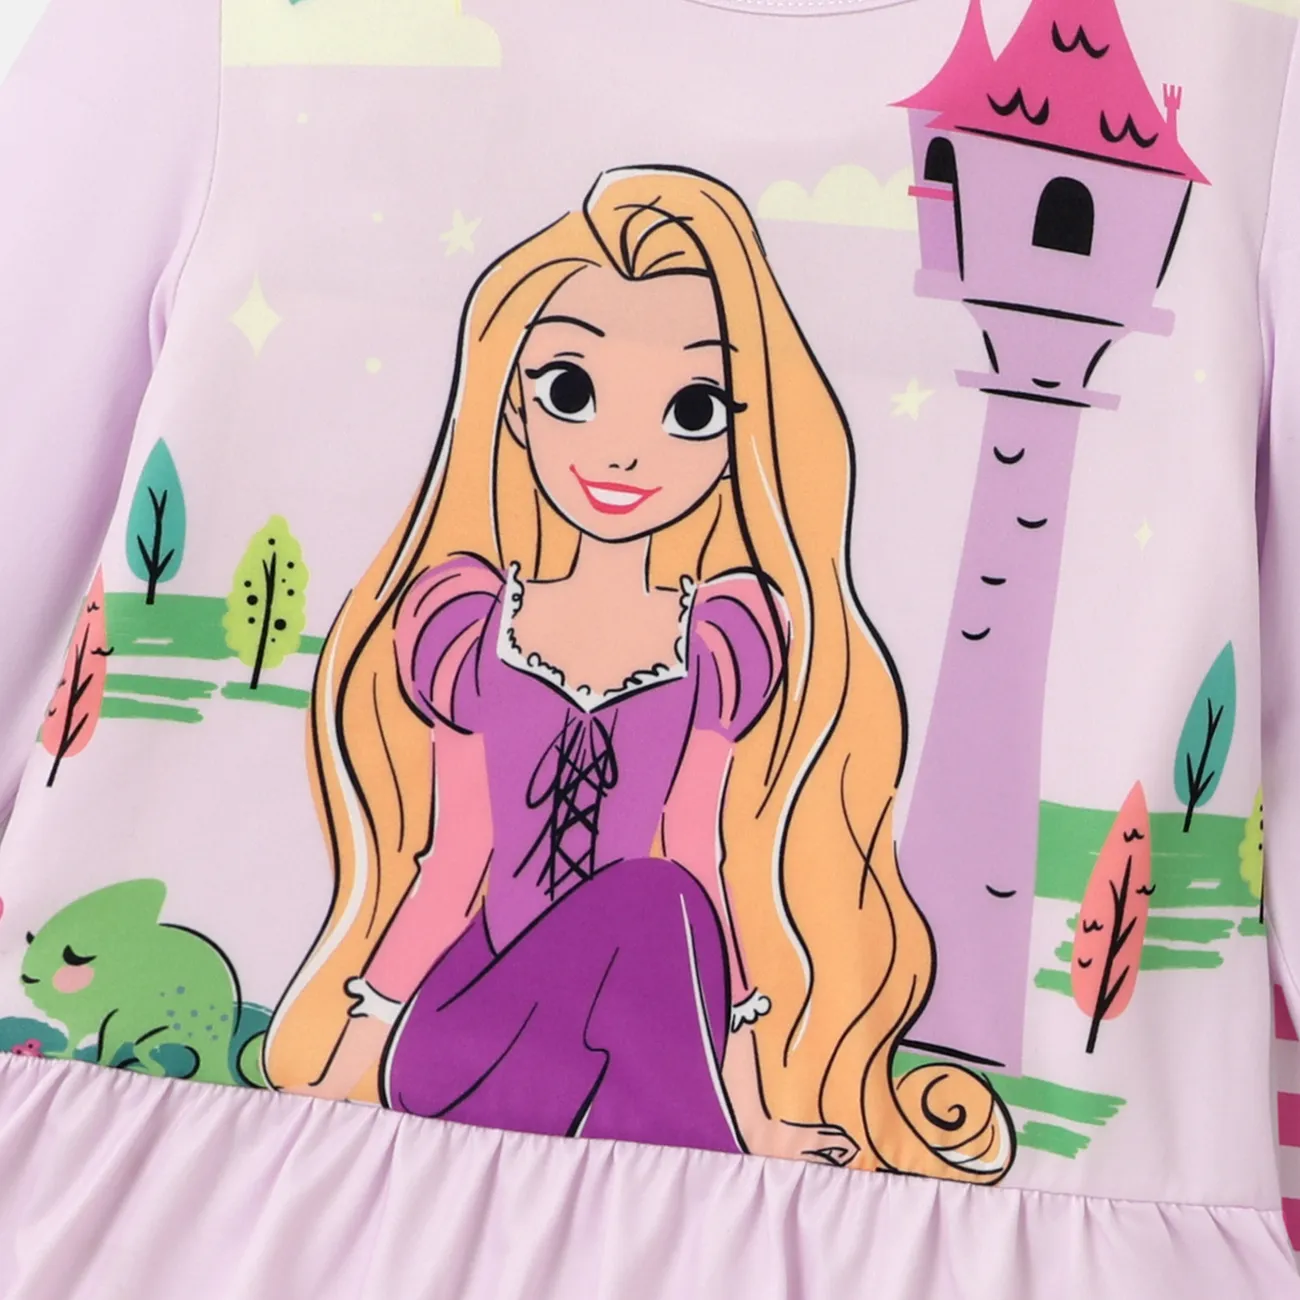 Disney Princess Toddler Girl 2pcs Character Print Peplum Long-sleeve Tee and Stripe Pants Set  Light Purple big image 1